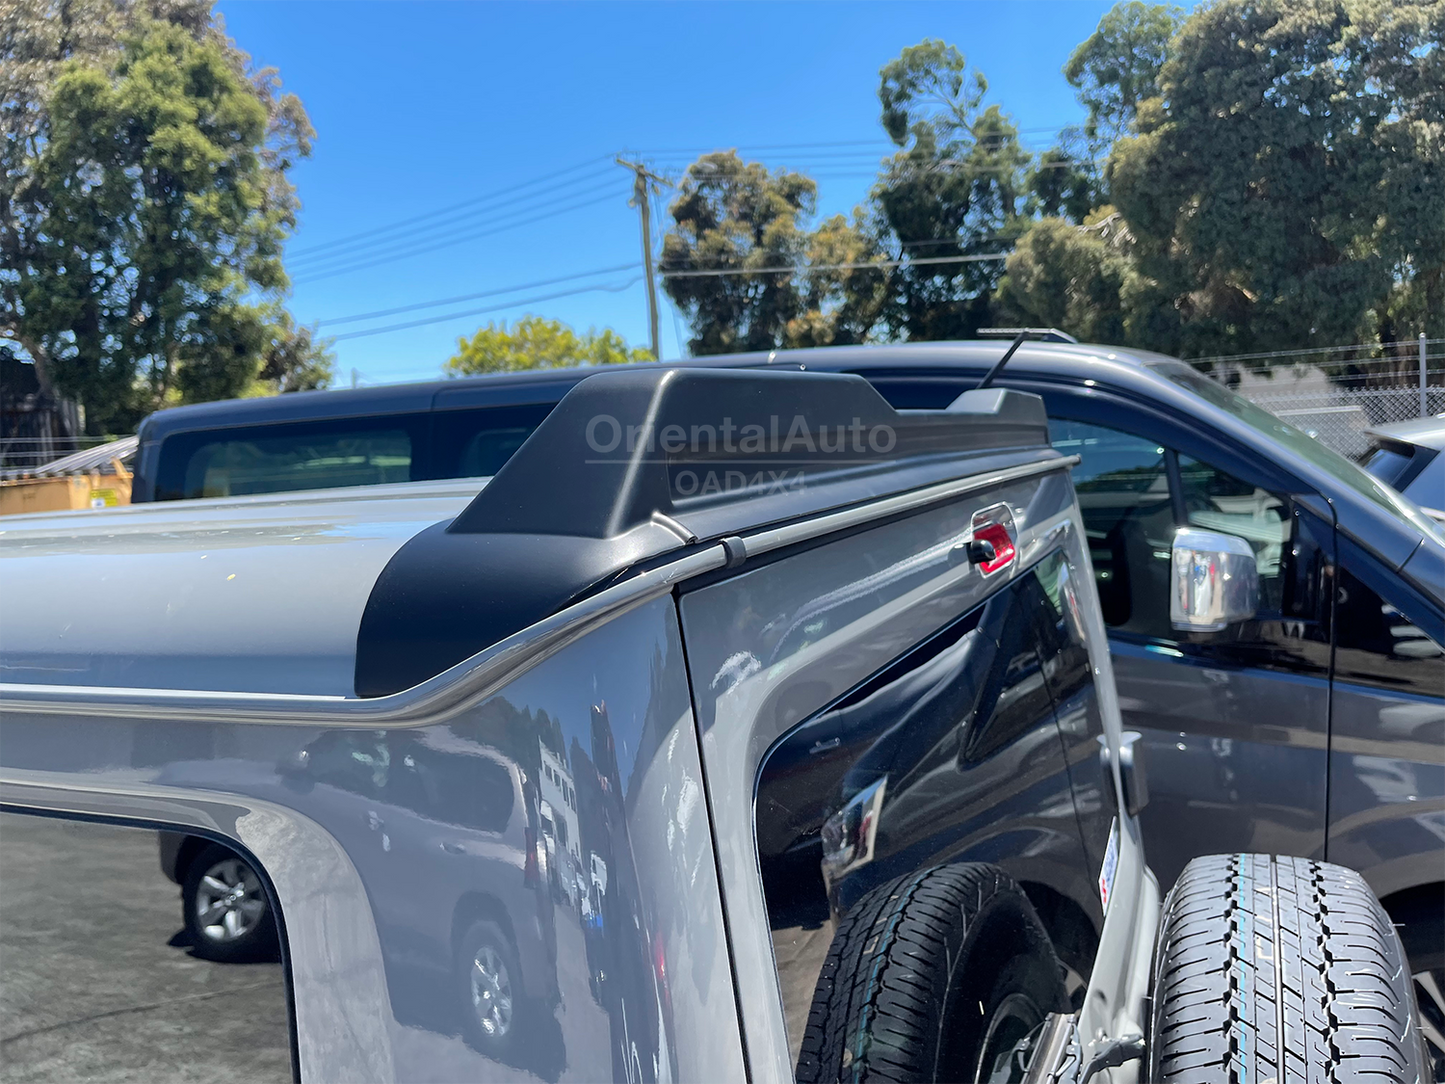 Rear Roof Spoiler & Bonnet Protector for Suzuki Jimny 2018-Onwards Wing Deflector Spoilers